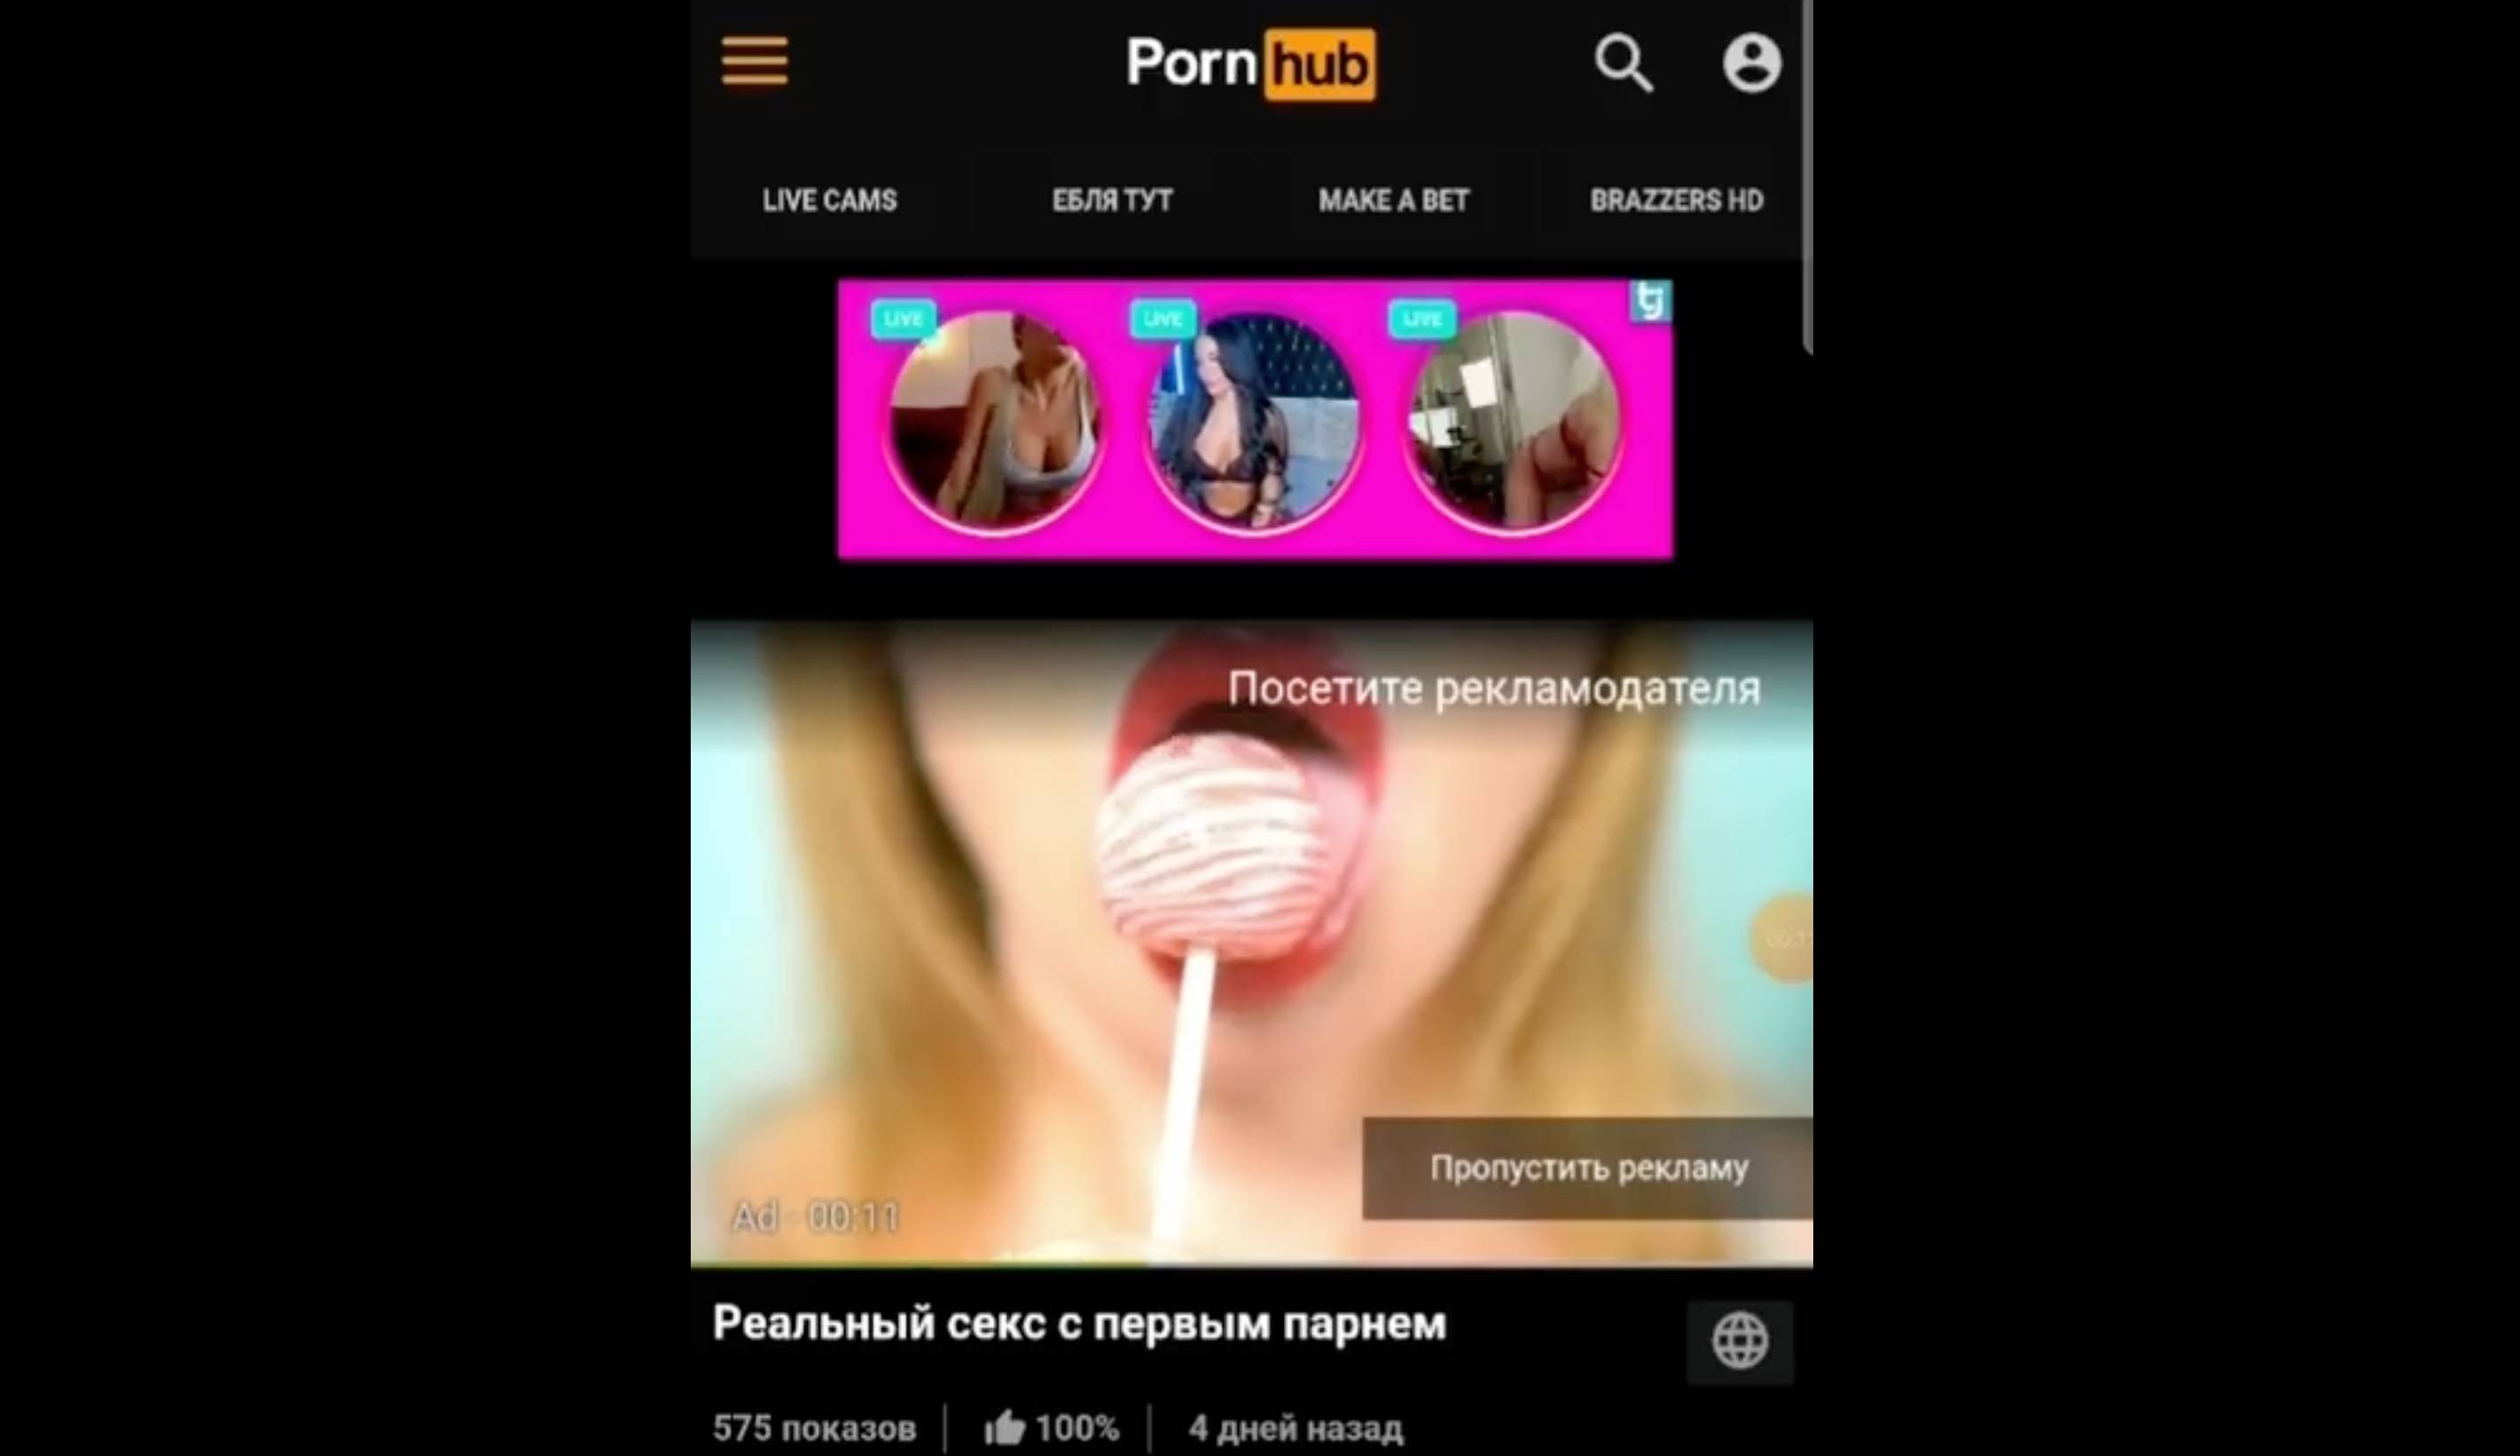 Porunhb - Notorious Russian Mercenaries Wagner Are Advertising on Pornhub